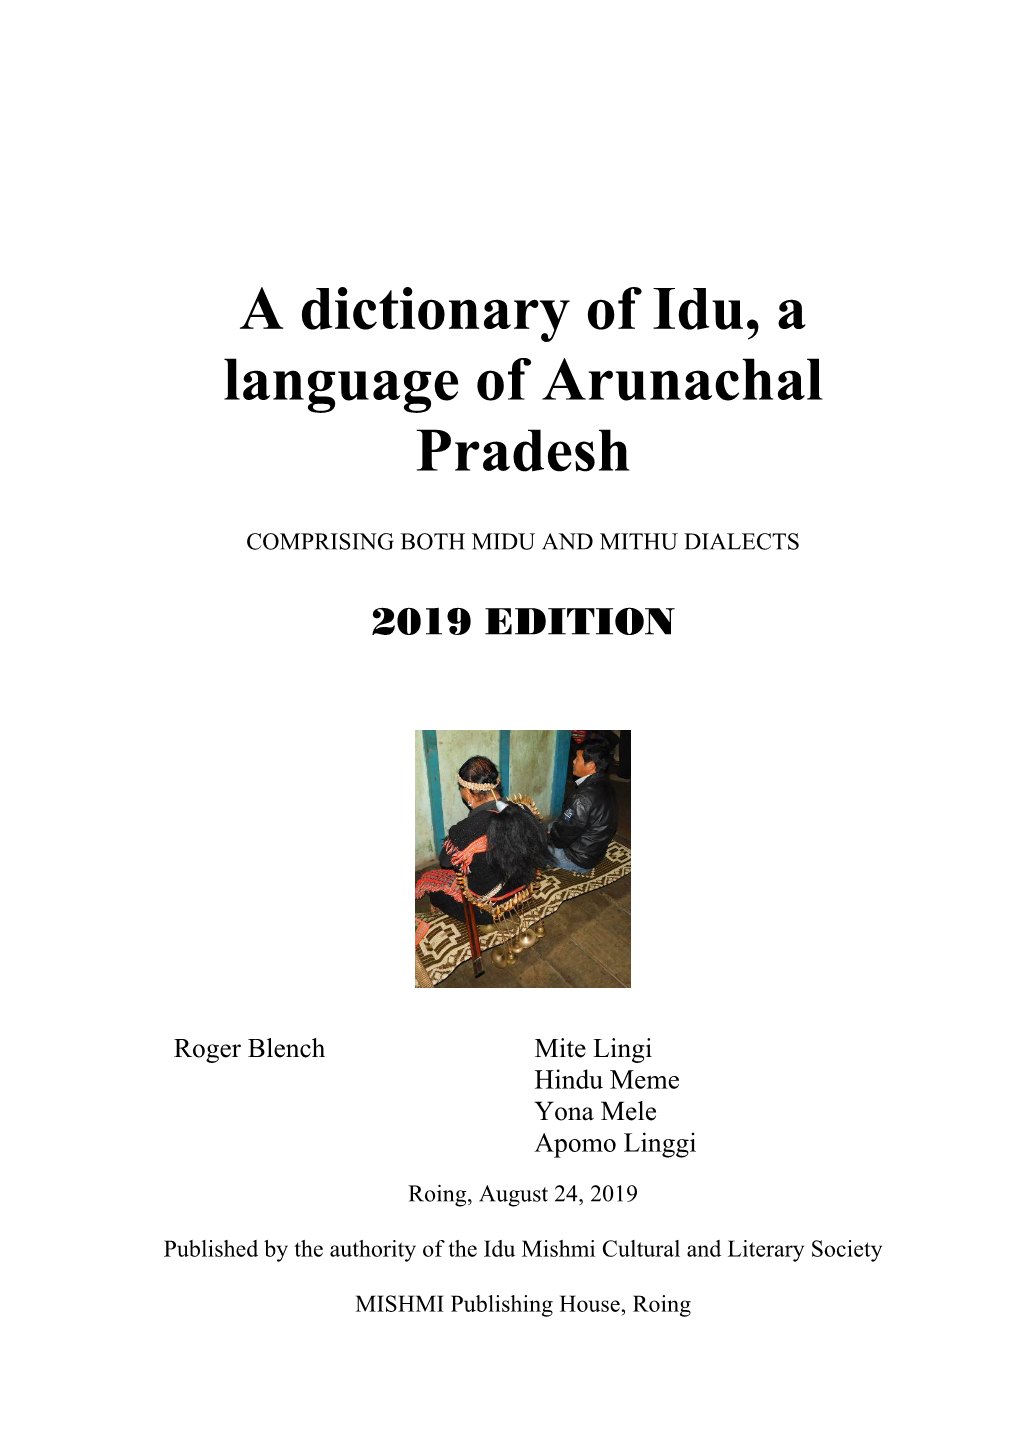 A Dictionary of Idu, a Language of Arunachal Pradesh